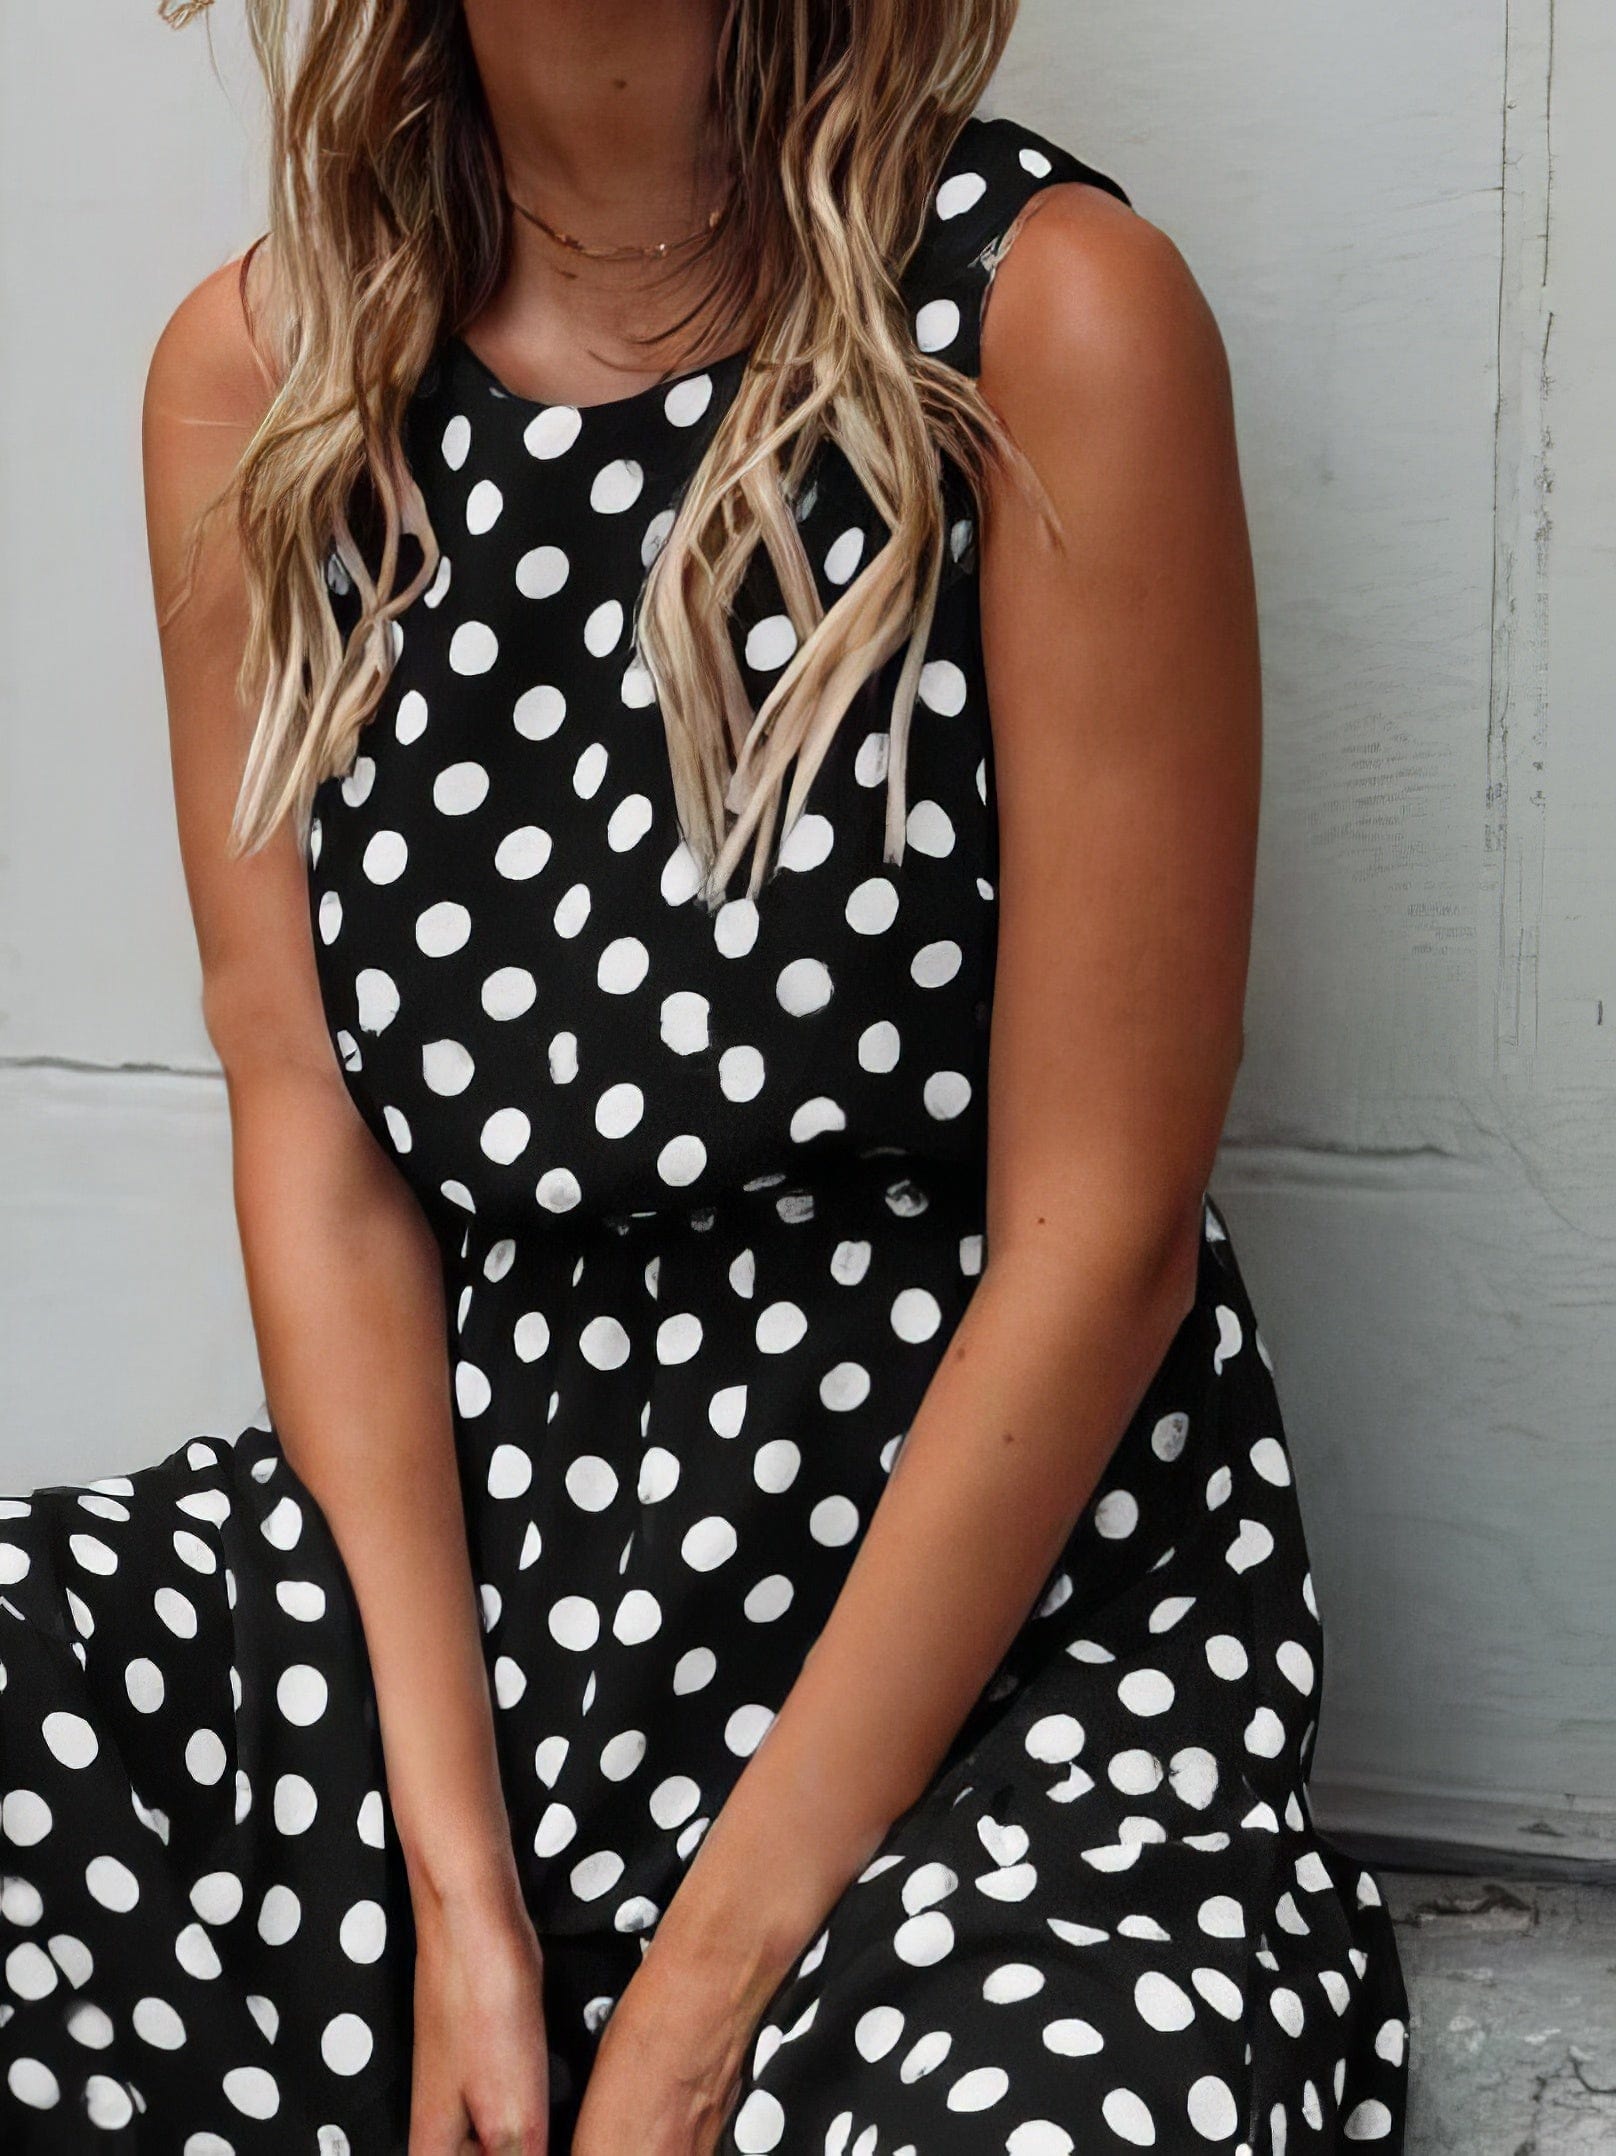 MsDressly Maxi Dresses Polka Dot Print Round Neck Casual Dress